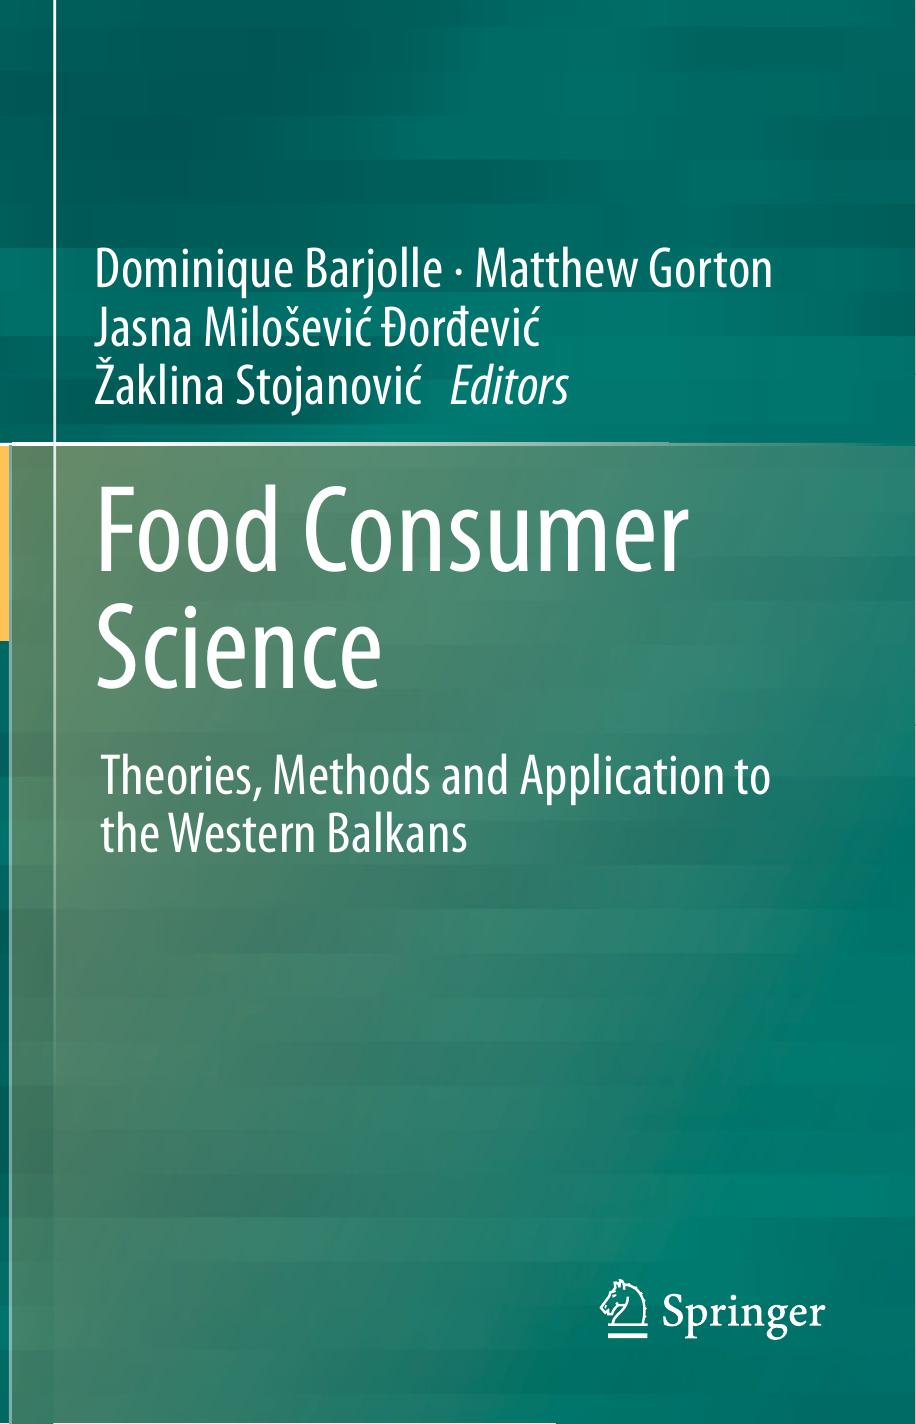 Food Consumer Science 2013